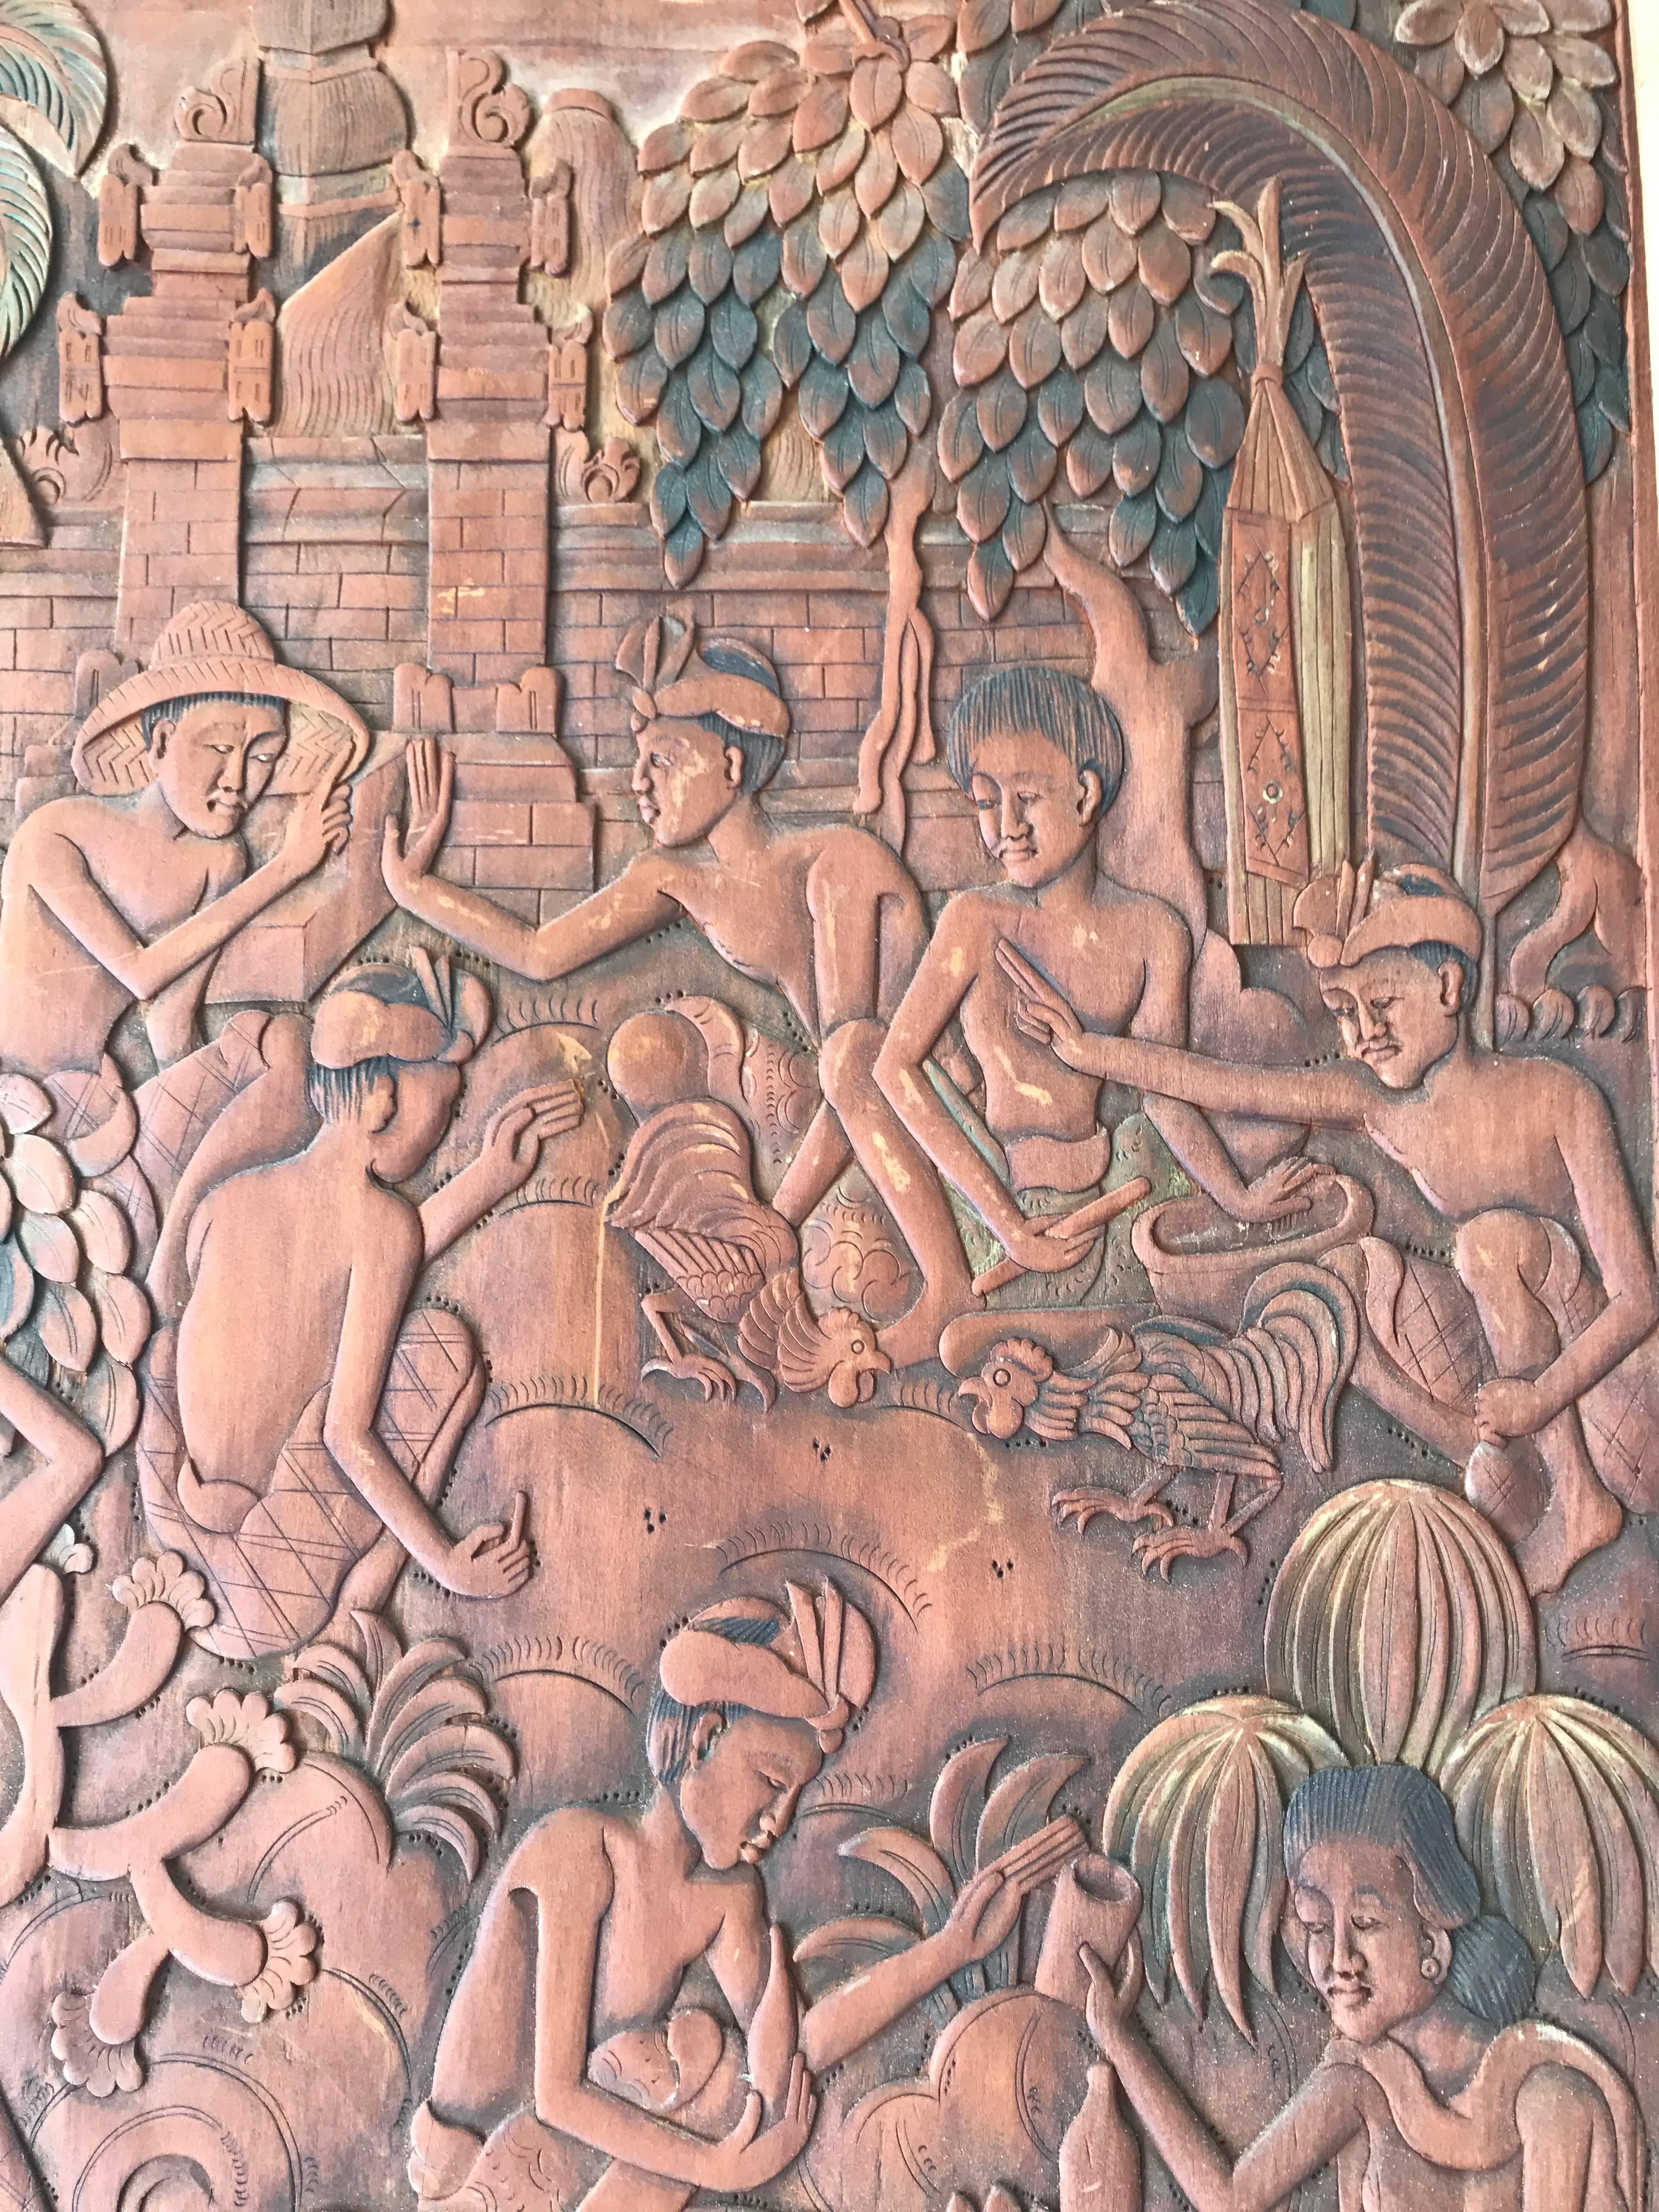 Sculpté à la main Sculpture balinaise, Batuan, peinture de combat de coqs sculptée à la main par Ida Bagus Made Raka en vente